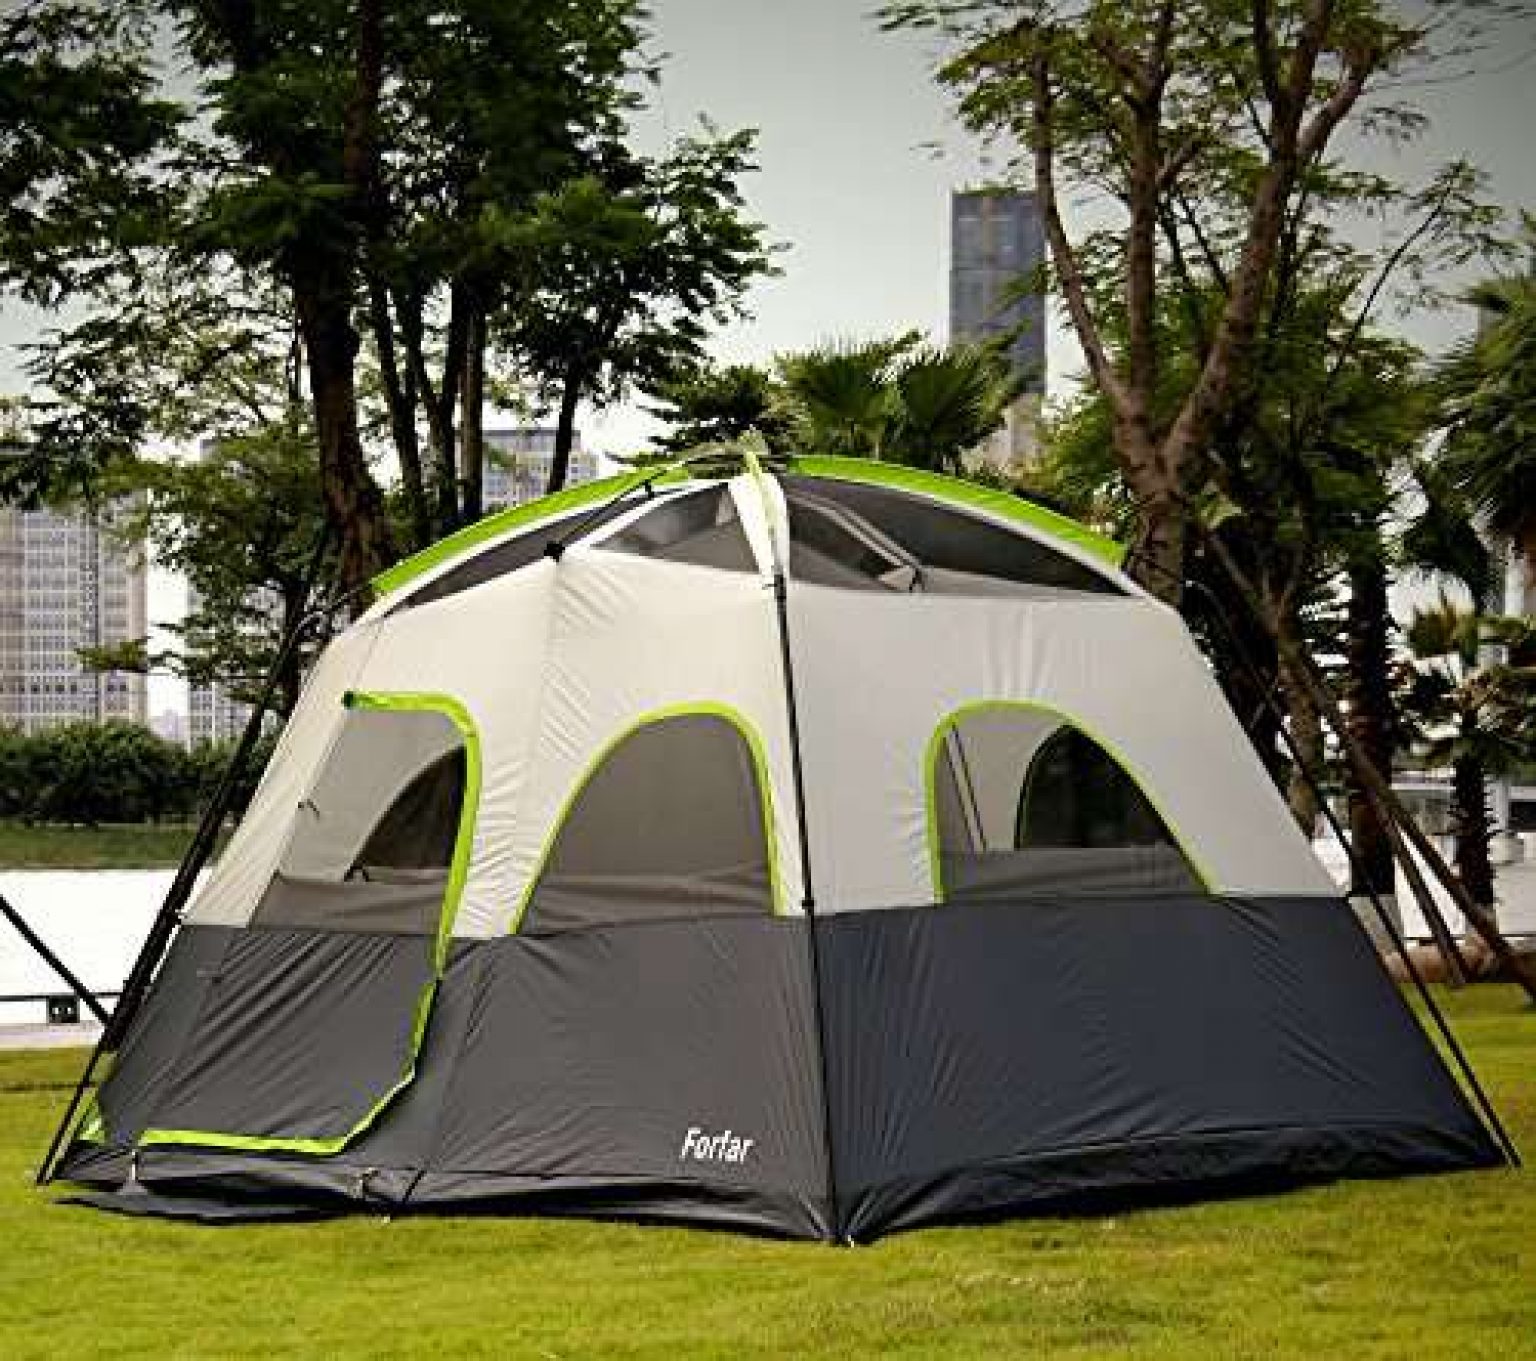 Forfar 5 Persons Tent 3 Seasons 2 Rooms Camping Tent